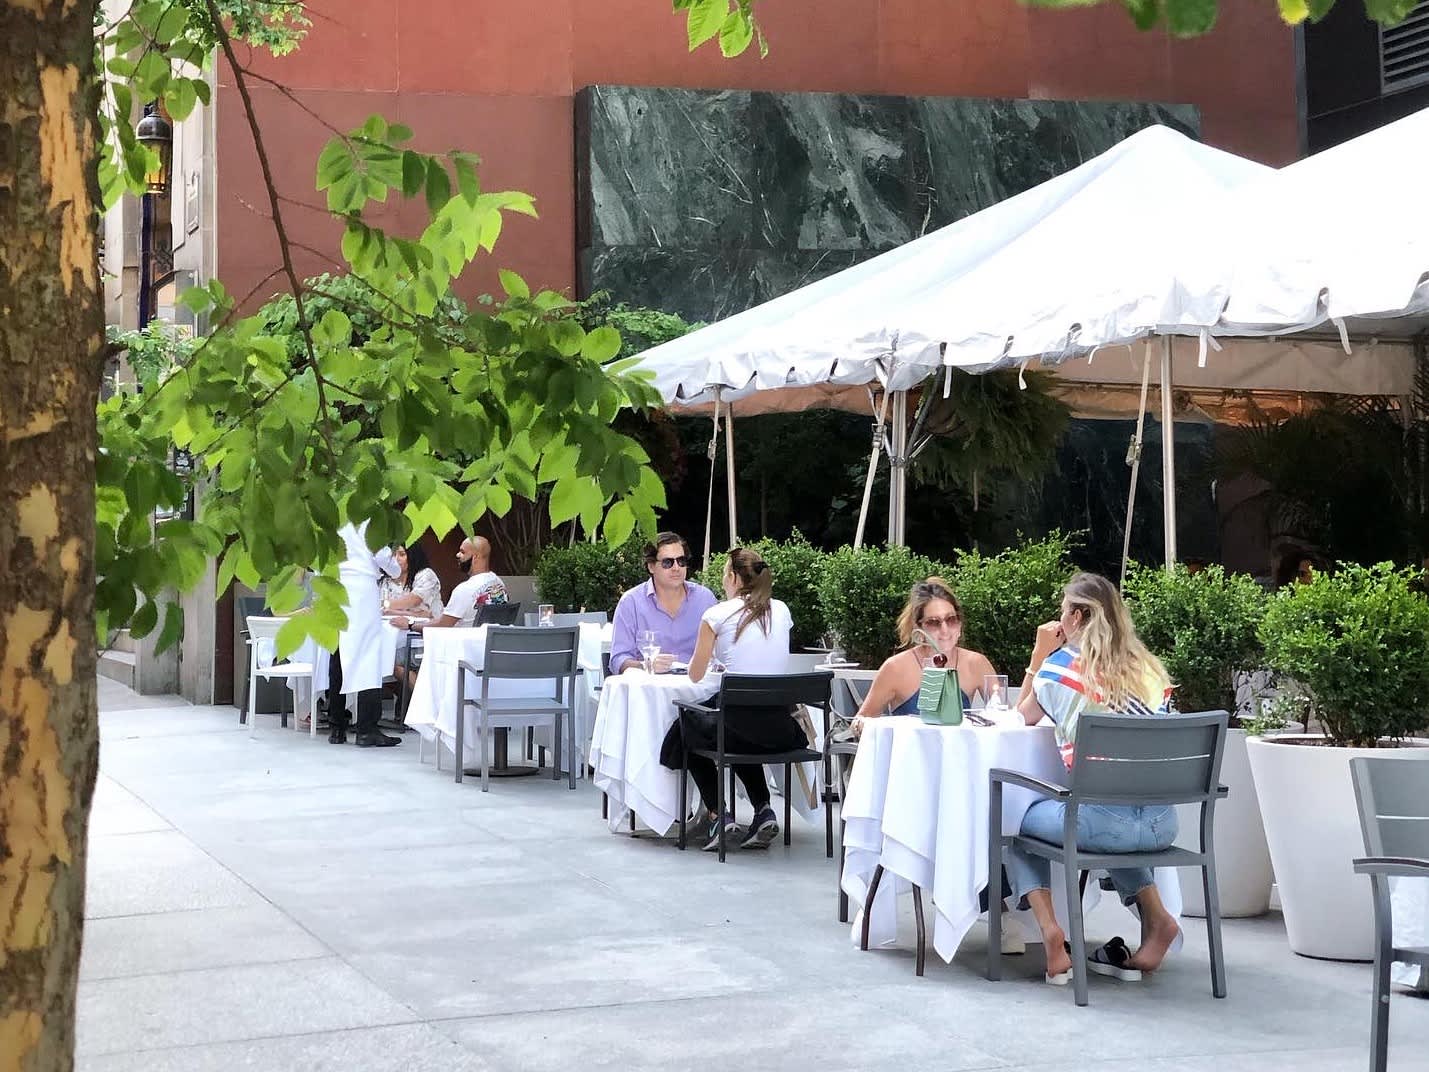 Delays in return to office hit midtown NYC restaurants